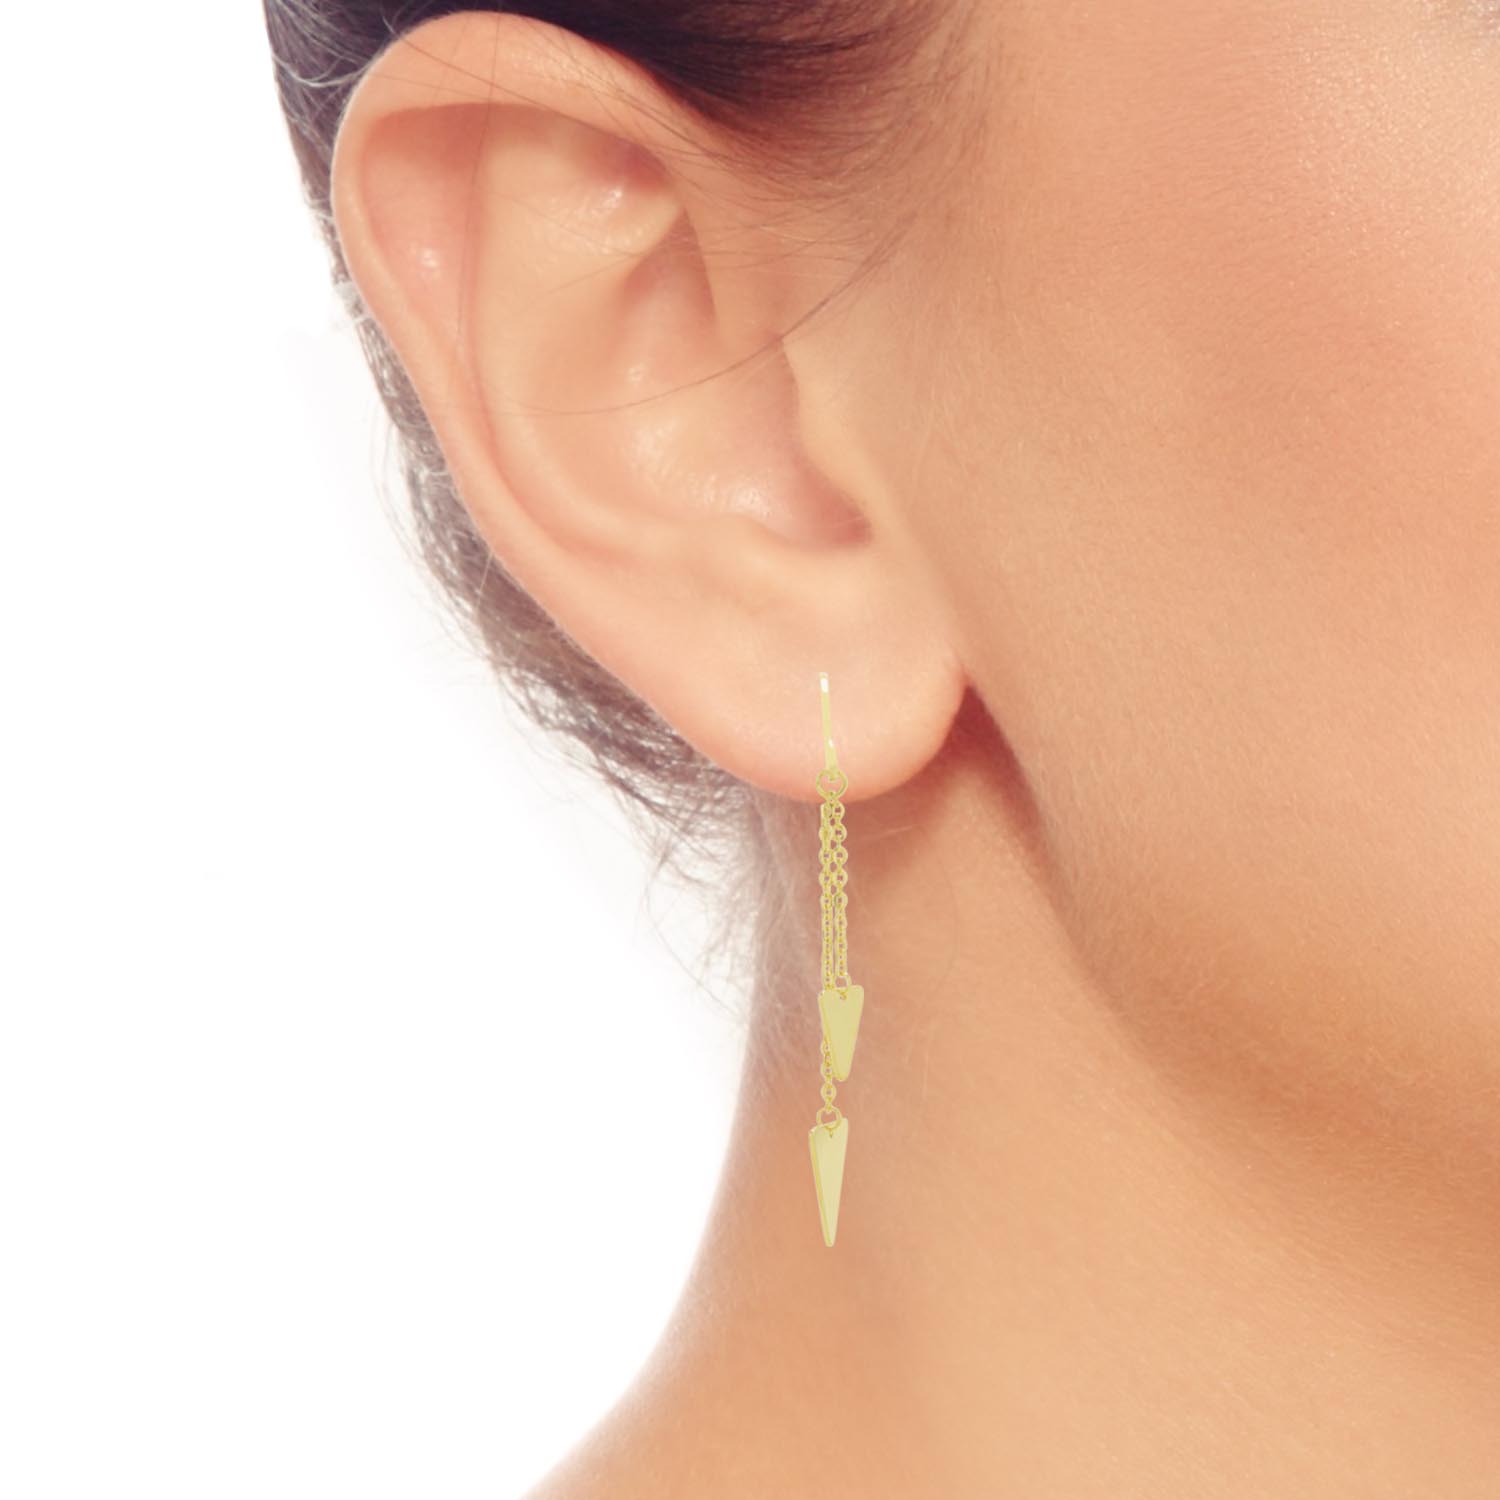 Dangle Triangle Earrings in 14kt Yellow Gold